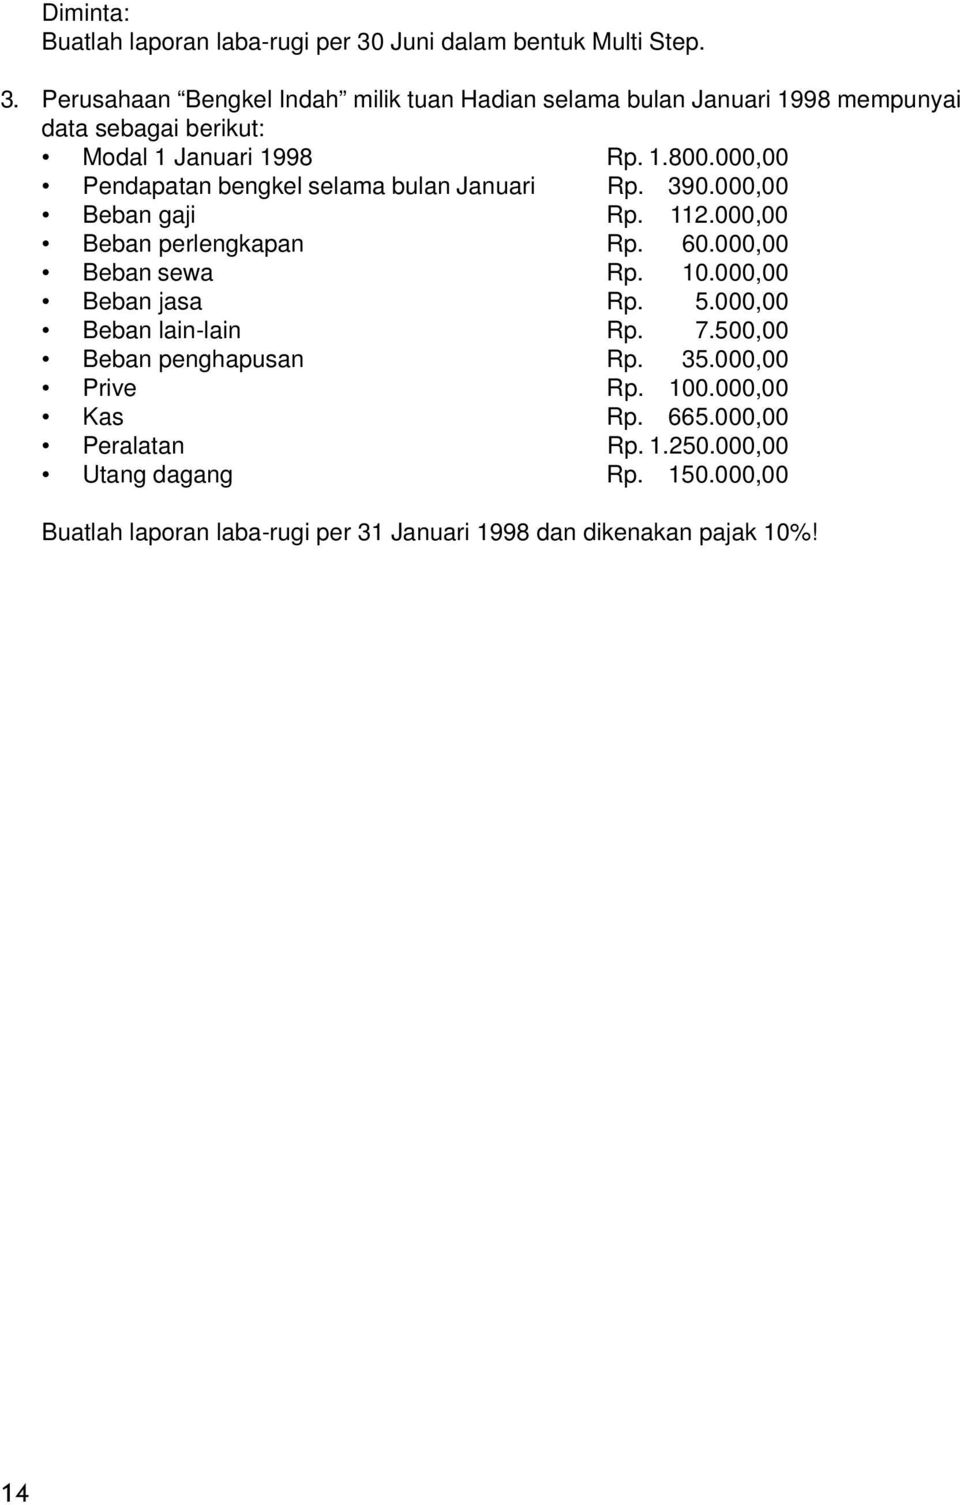 Perusahaan Bengkel Indah milik tuan Hadian selama bulan Januari 1998 mempunyai data sebagai berikut: Modal 1 Januari 1998 Rp. 1.800.